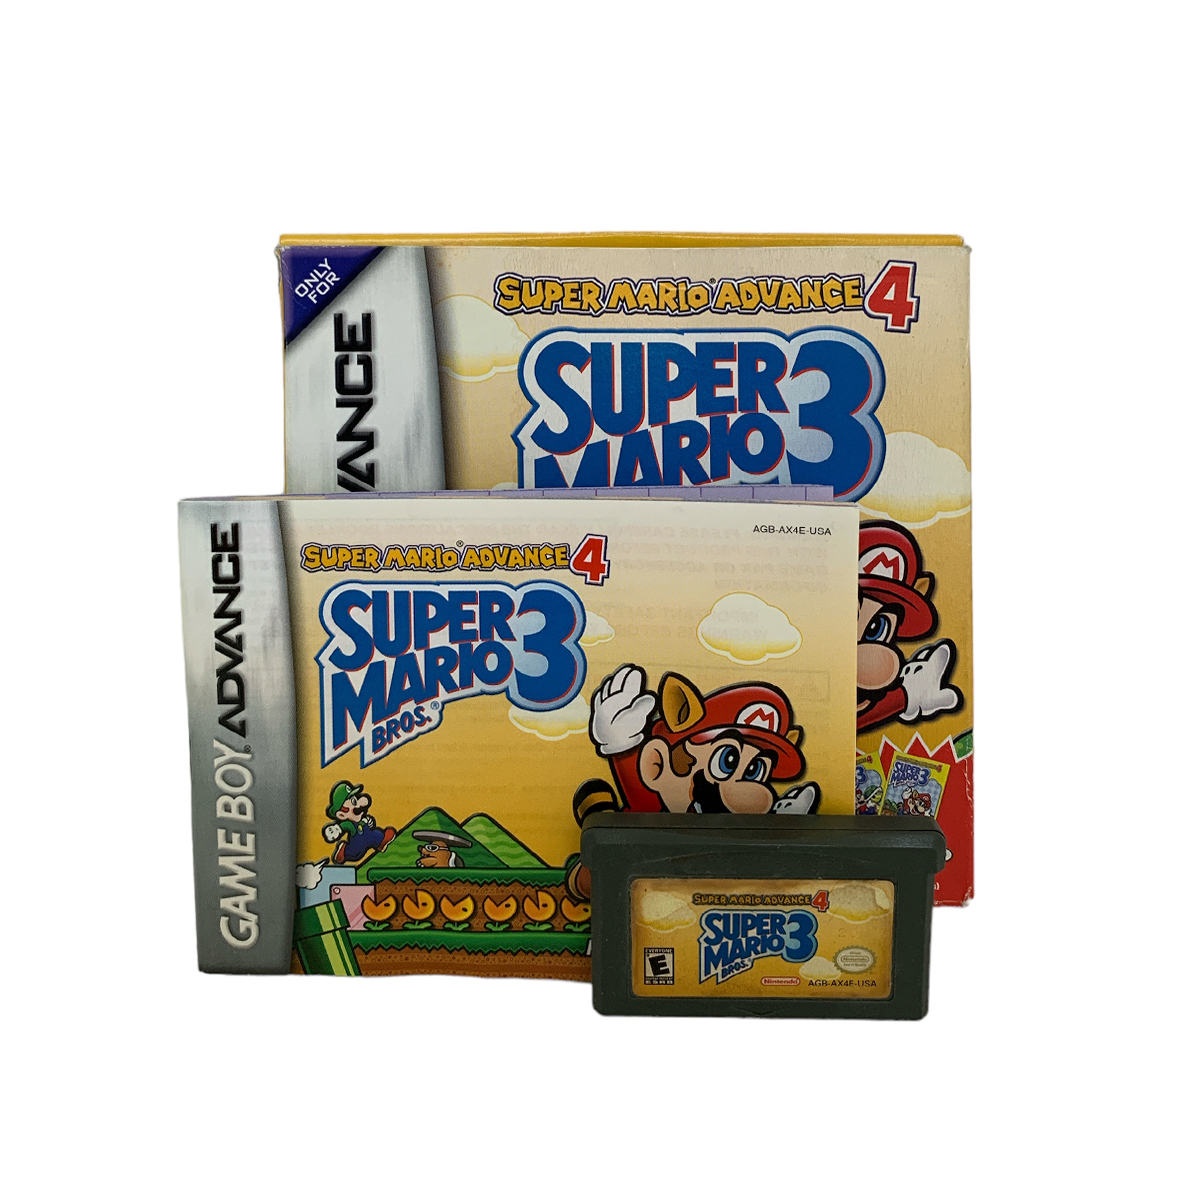 Cartucho de Super Mario Bros. 2 é vendido por US$ 88,5 mil